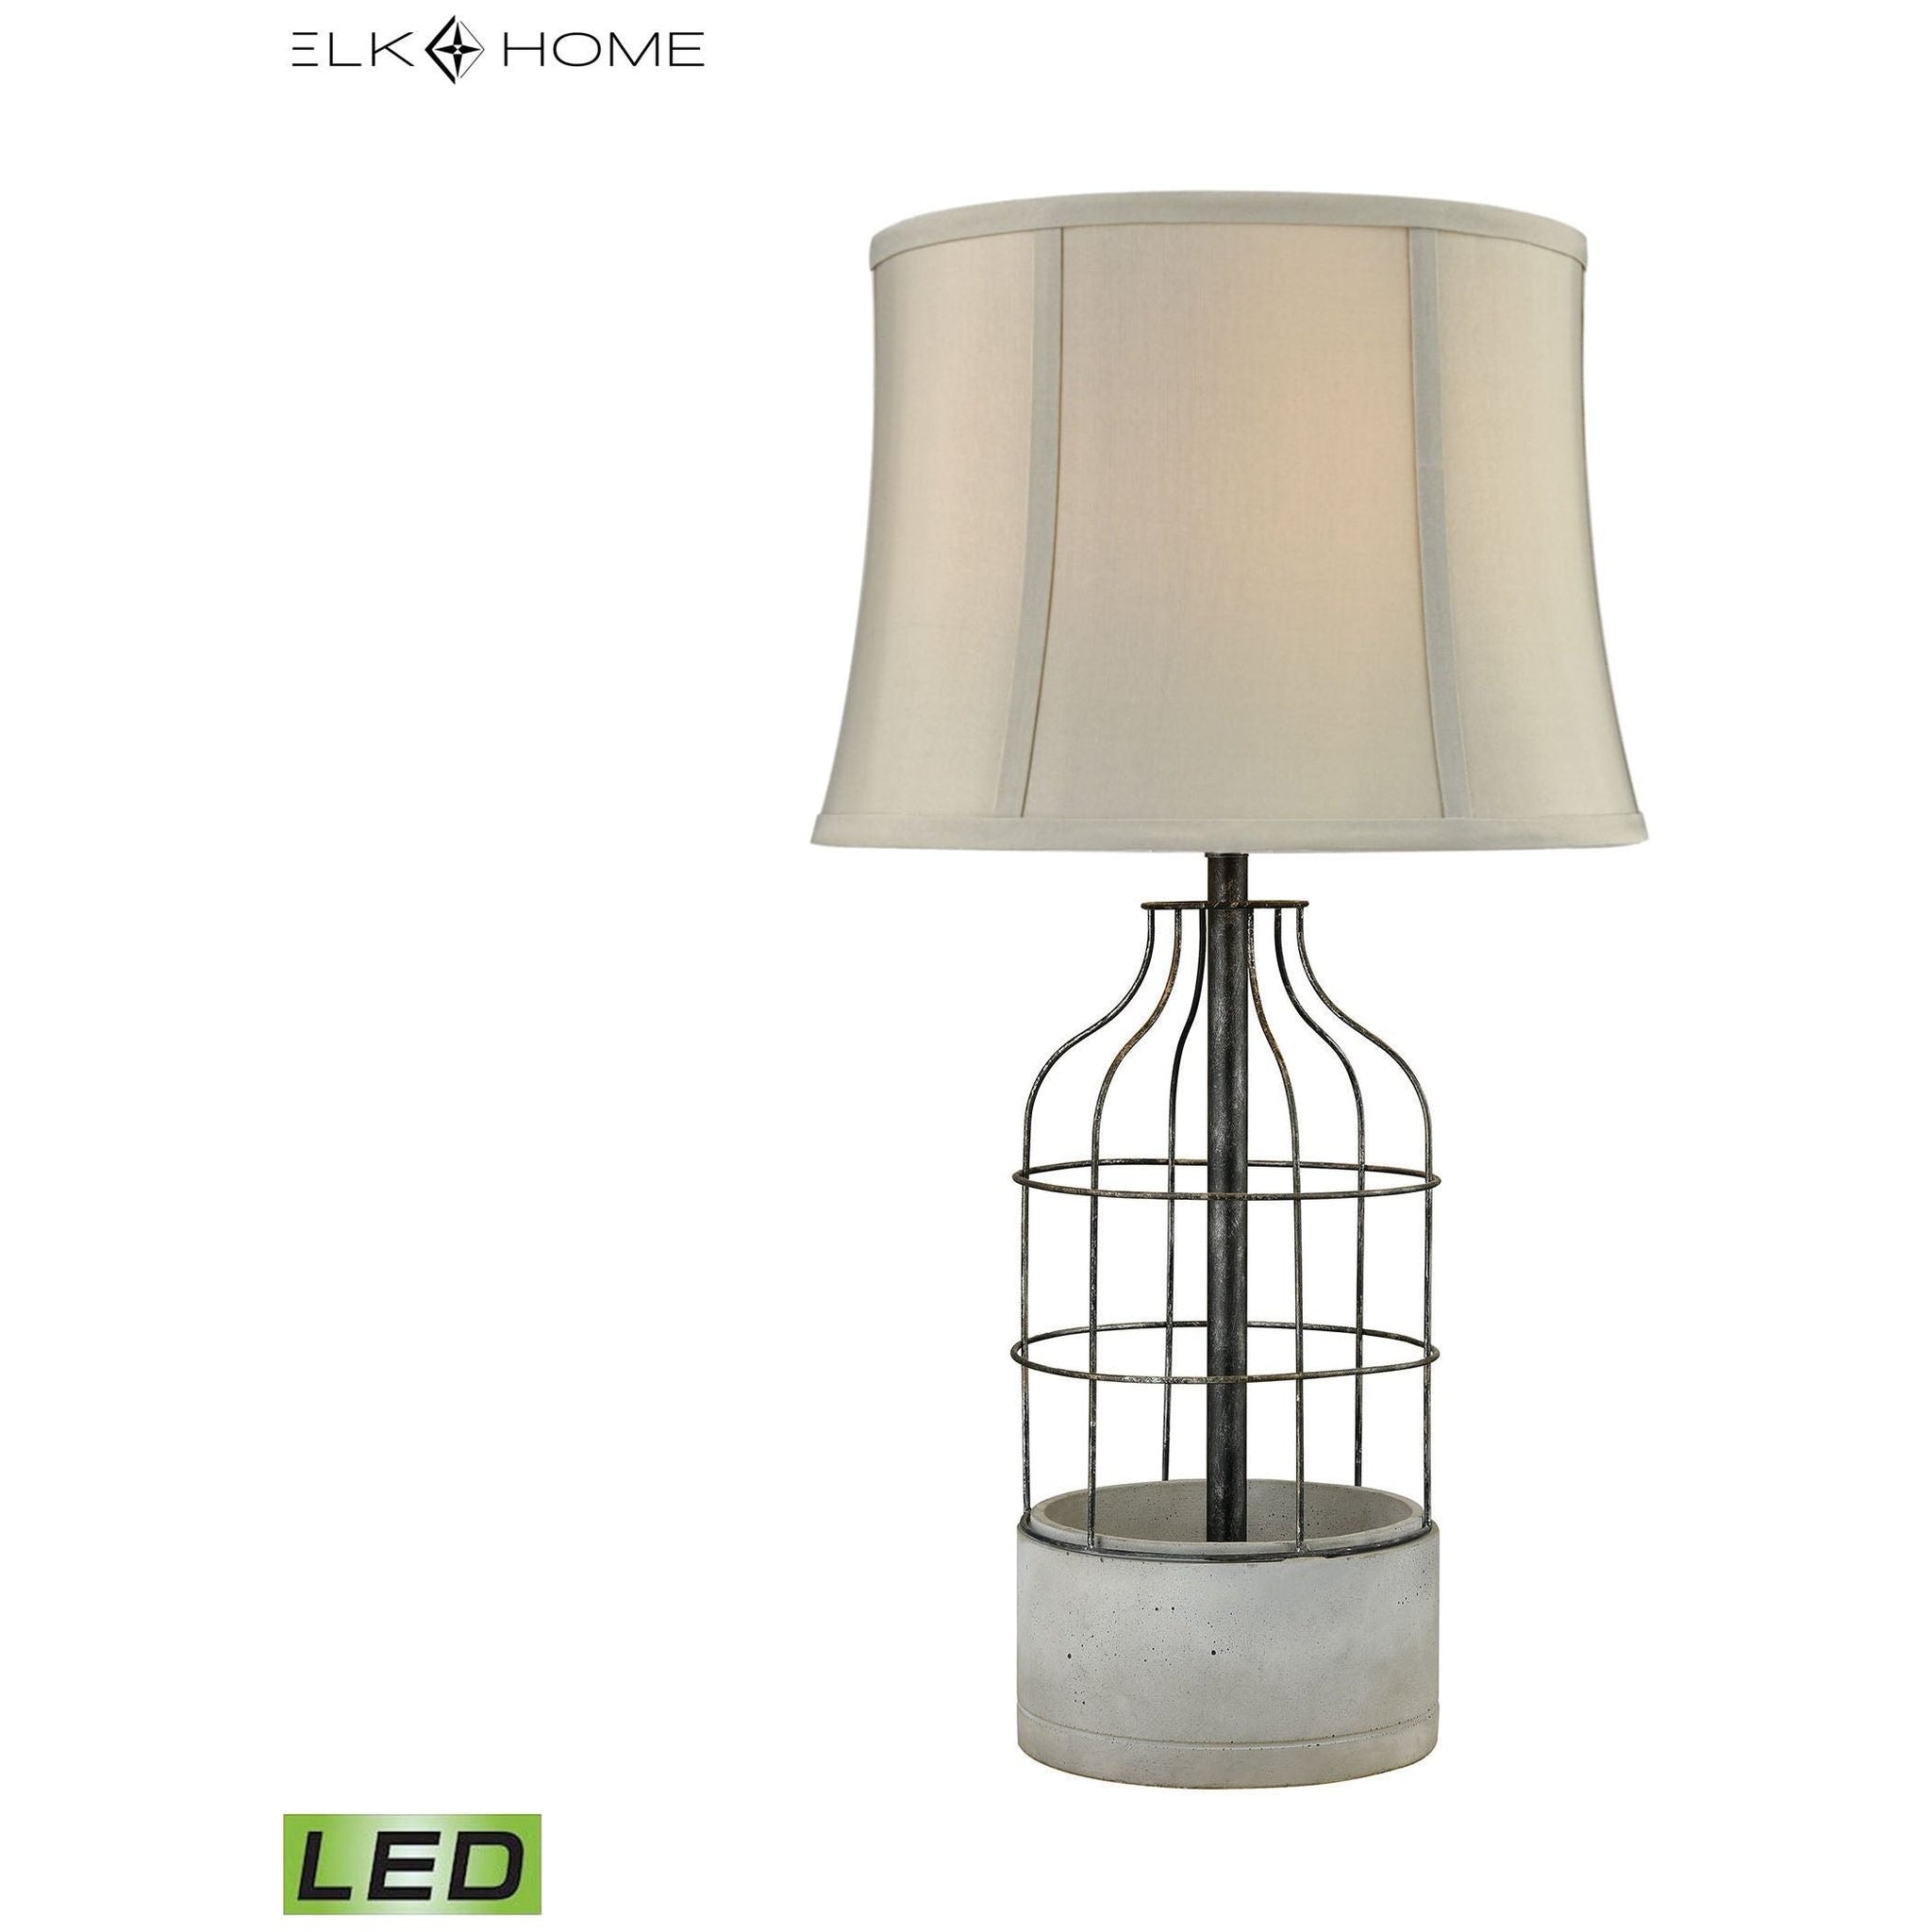 Rochefort 27" High 1-Light Outdoor Table Lamp